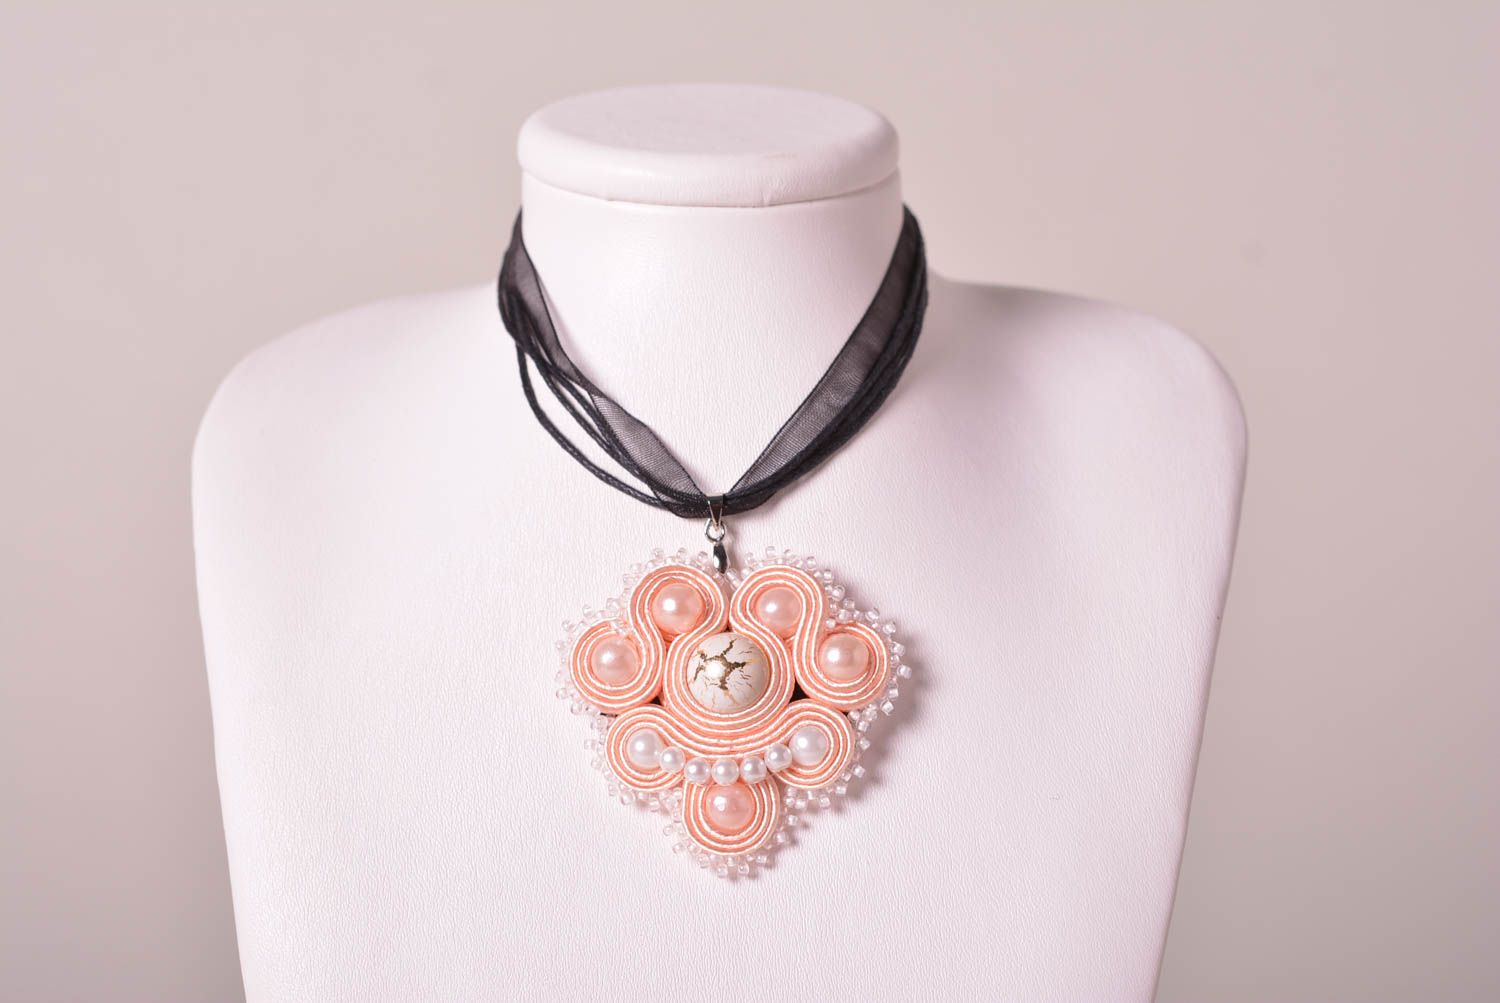 Handmade necklace charm necklace soutache pendant necklace designer jewelry photo 2